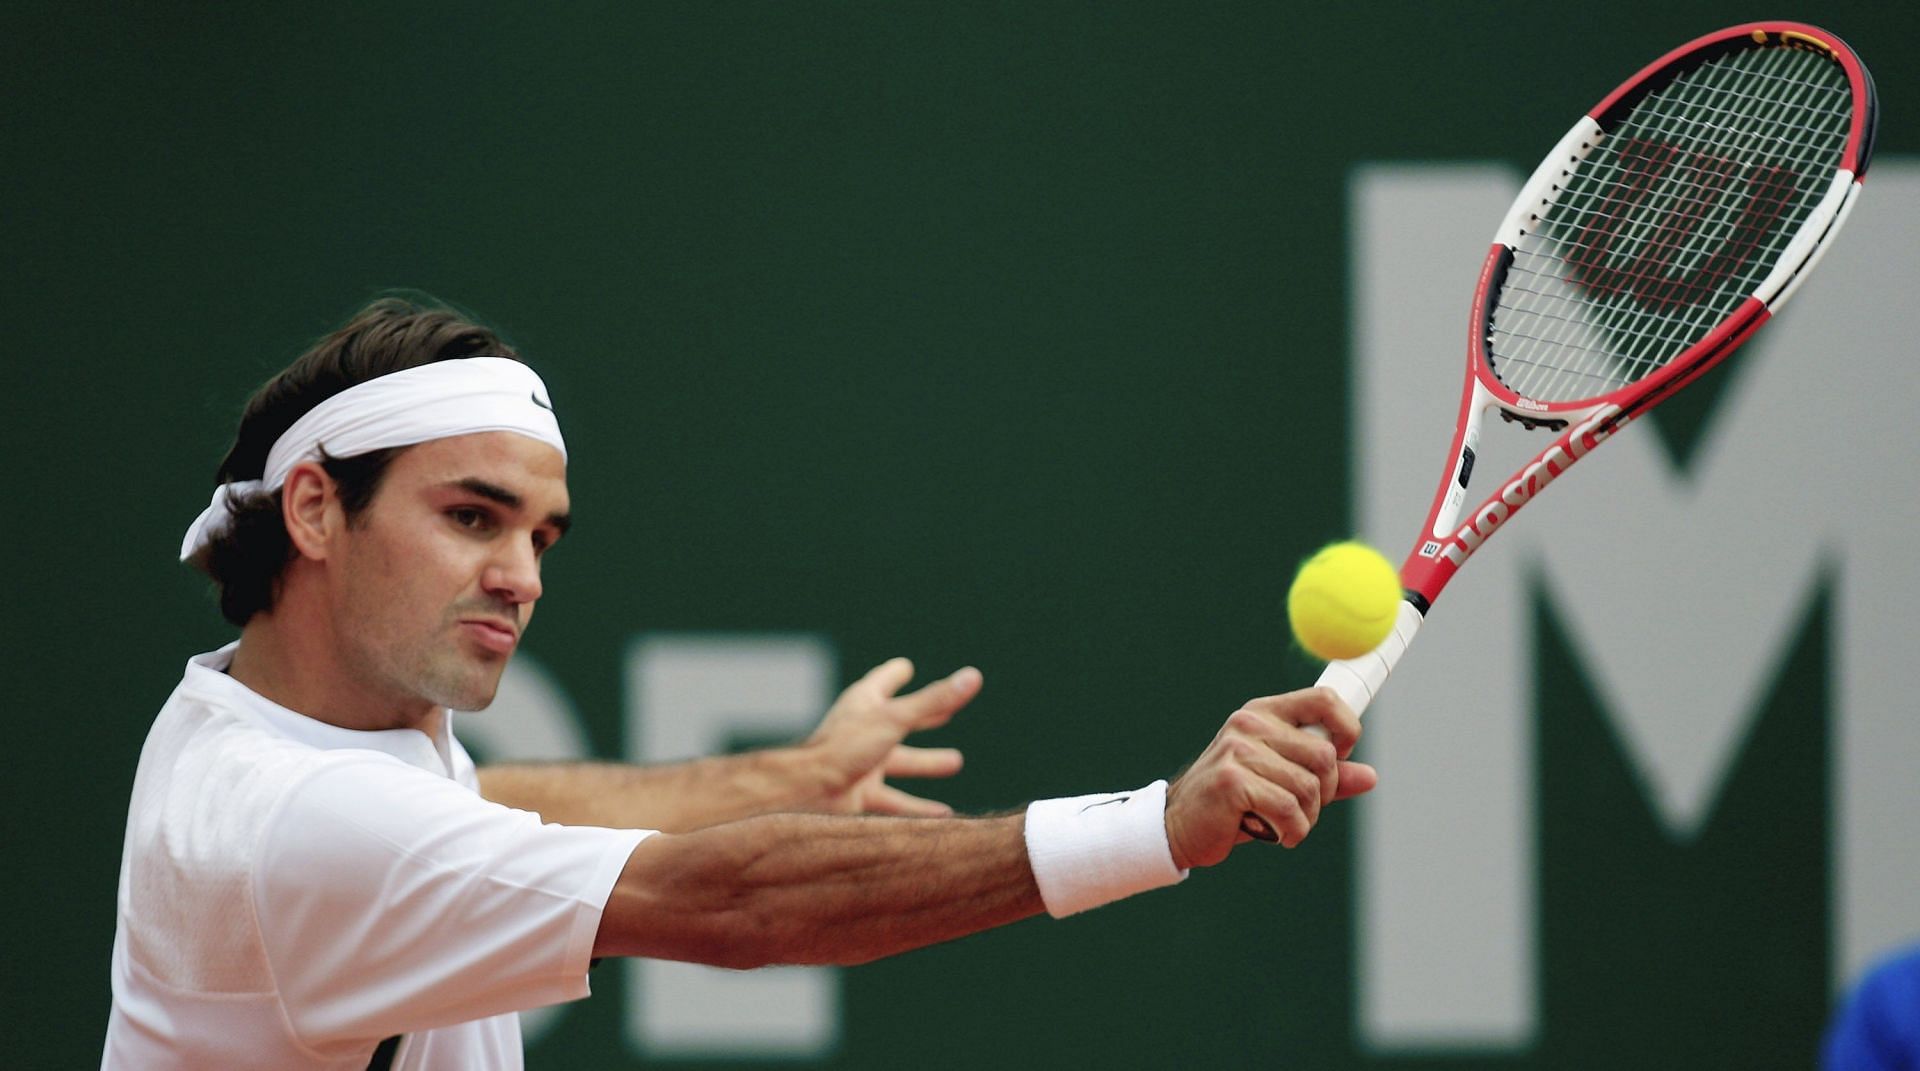 Federer at the 2006 Monte-Carlo Masters, where he beat Novak Djokovic